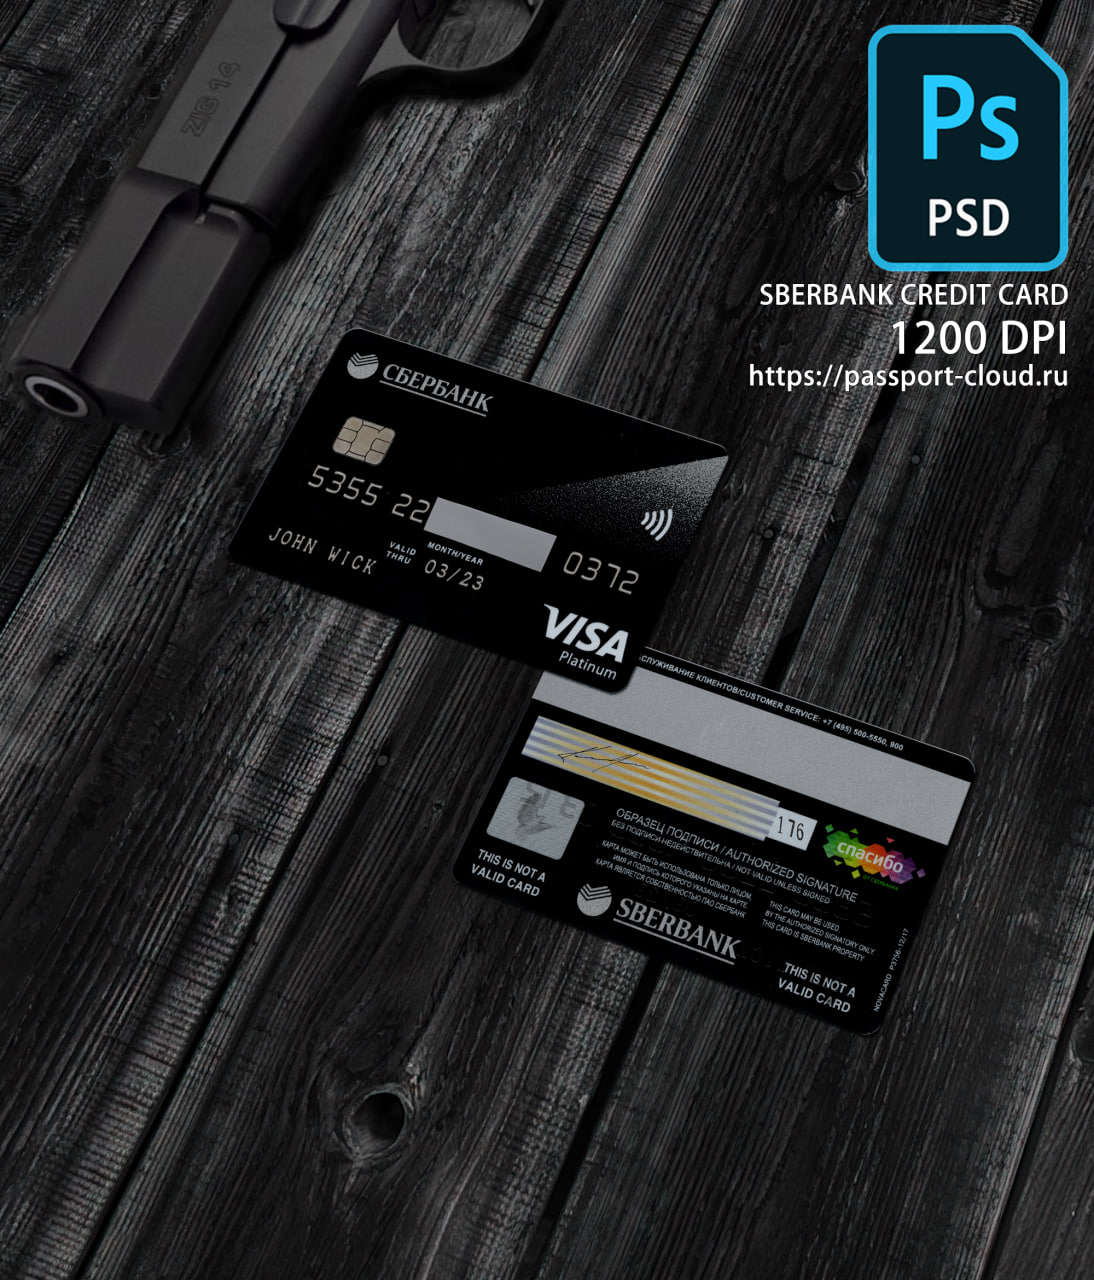 Sberbank Credit Card PSD-0